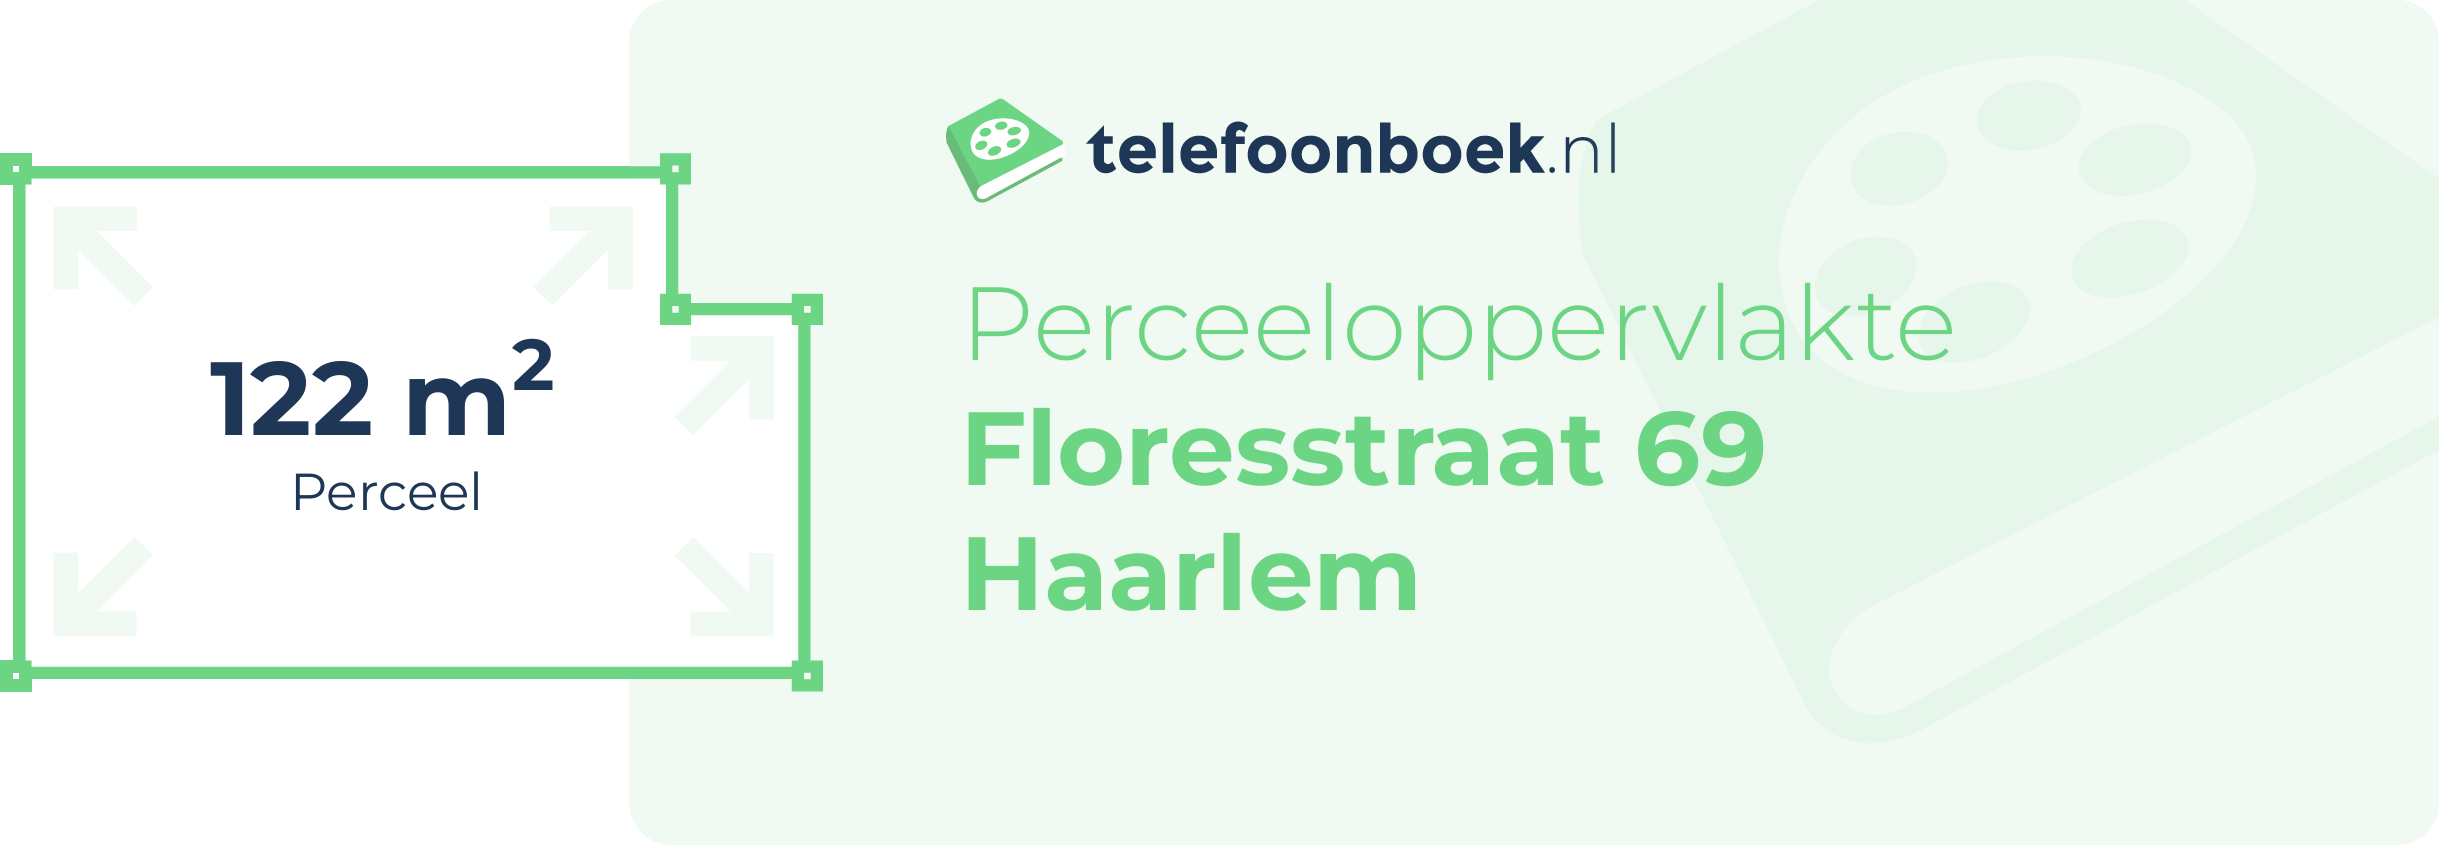 Perceeloppervlakte Floresstraat 69 Haarlem